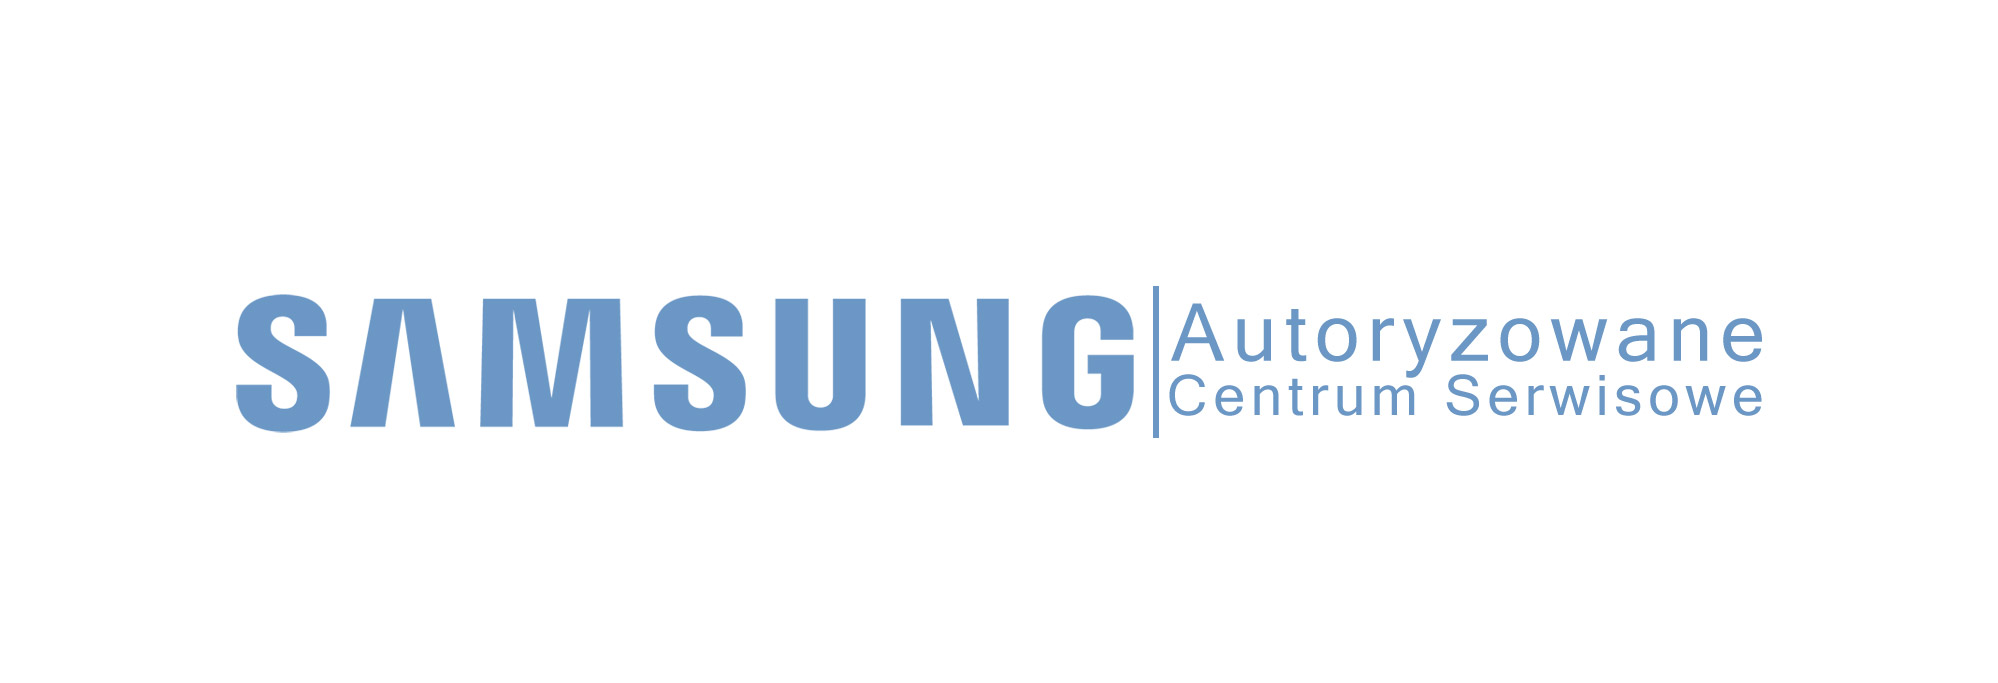 Samsung-centrum-serwisowe-krakow | Serwis RTV AGD, Centrum ...